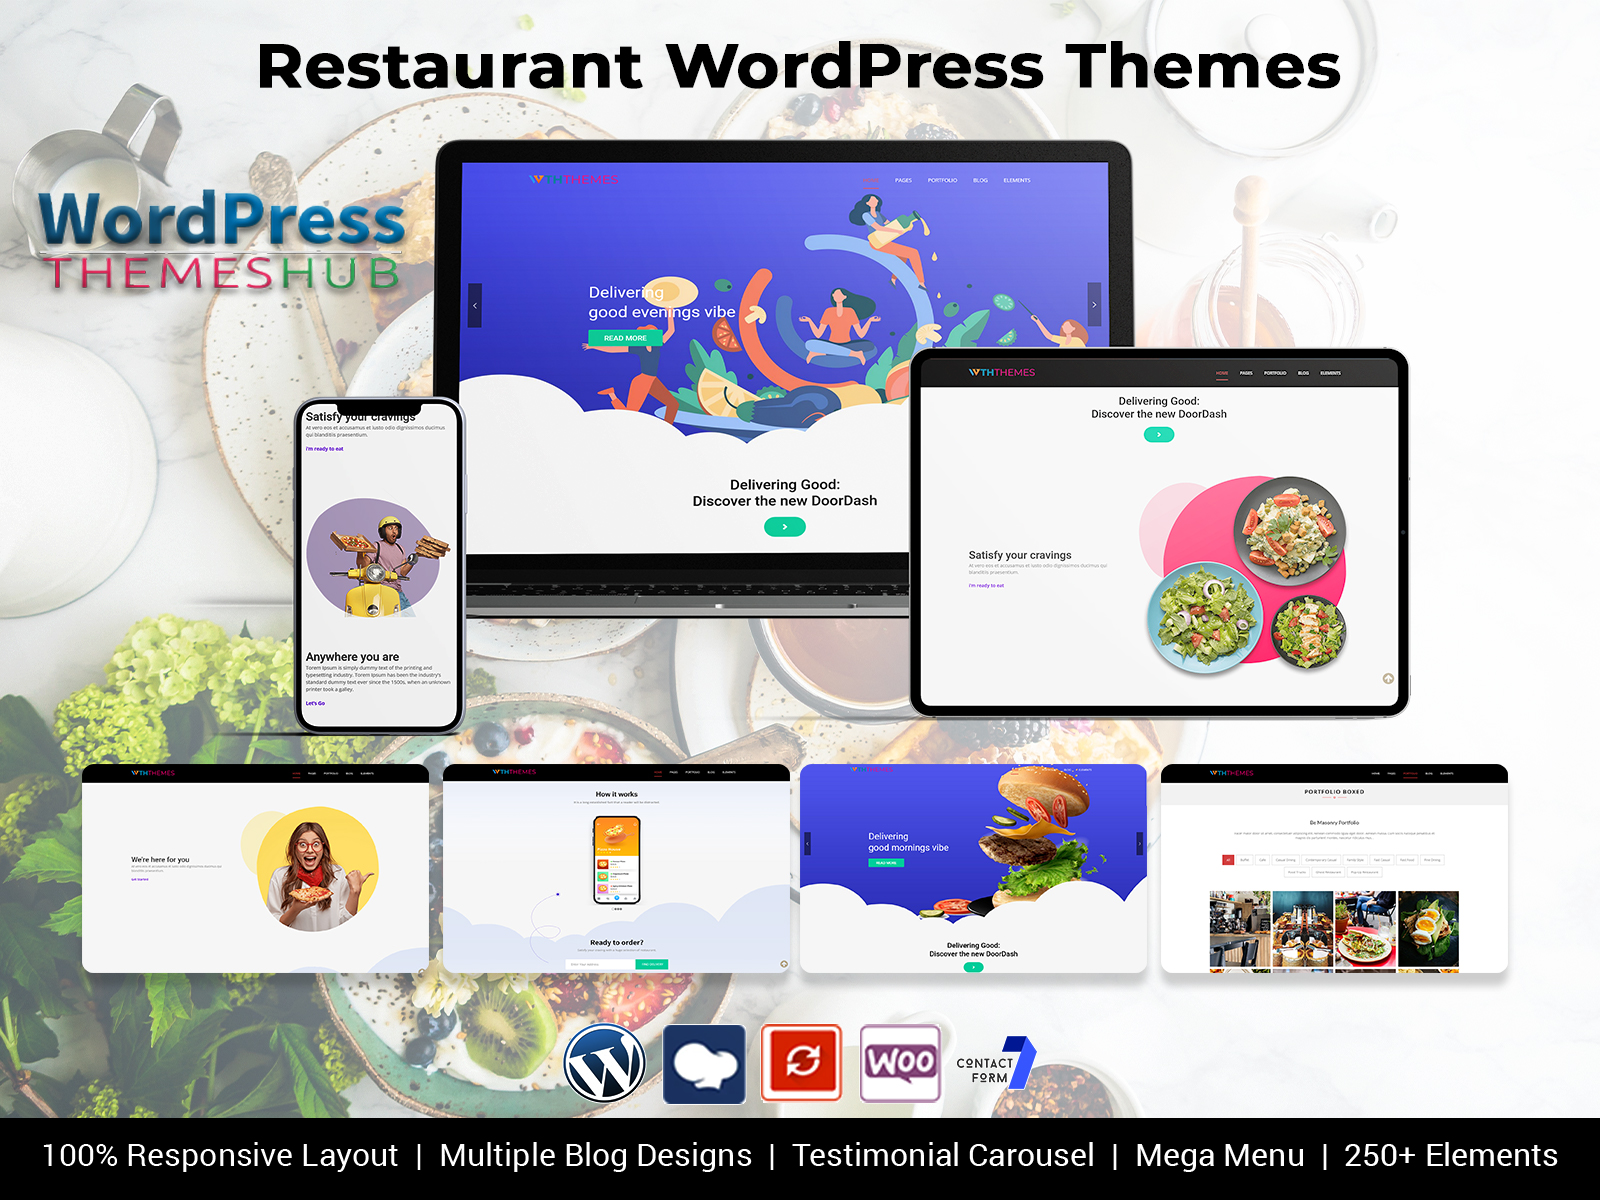 Restaurant WordPress Theme For Delicious Food Website